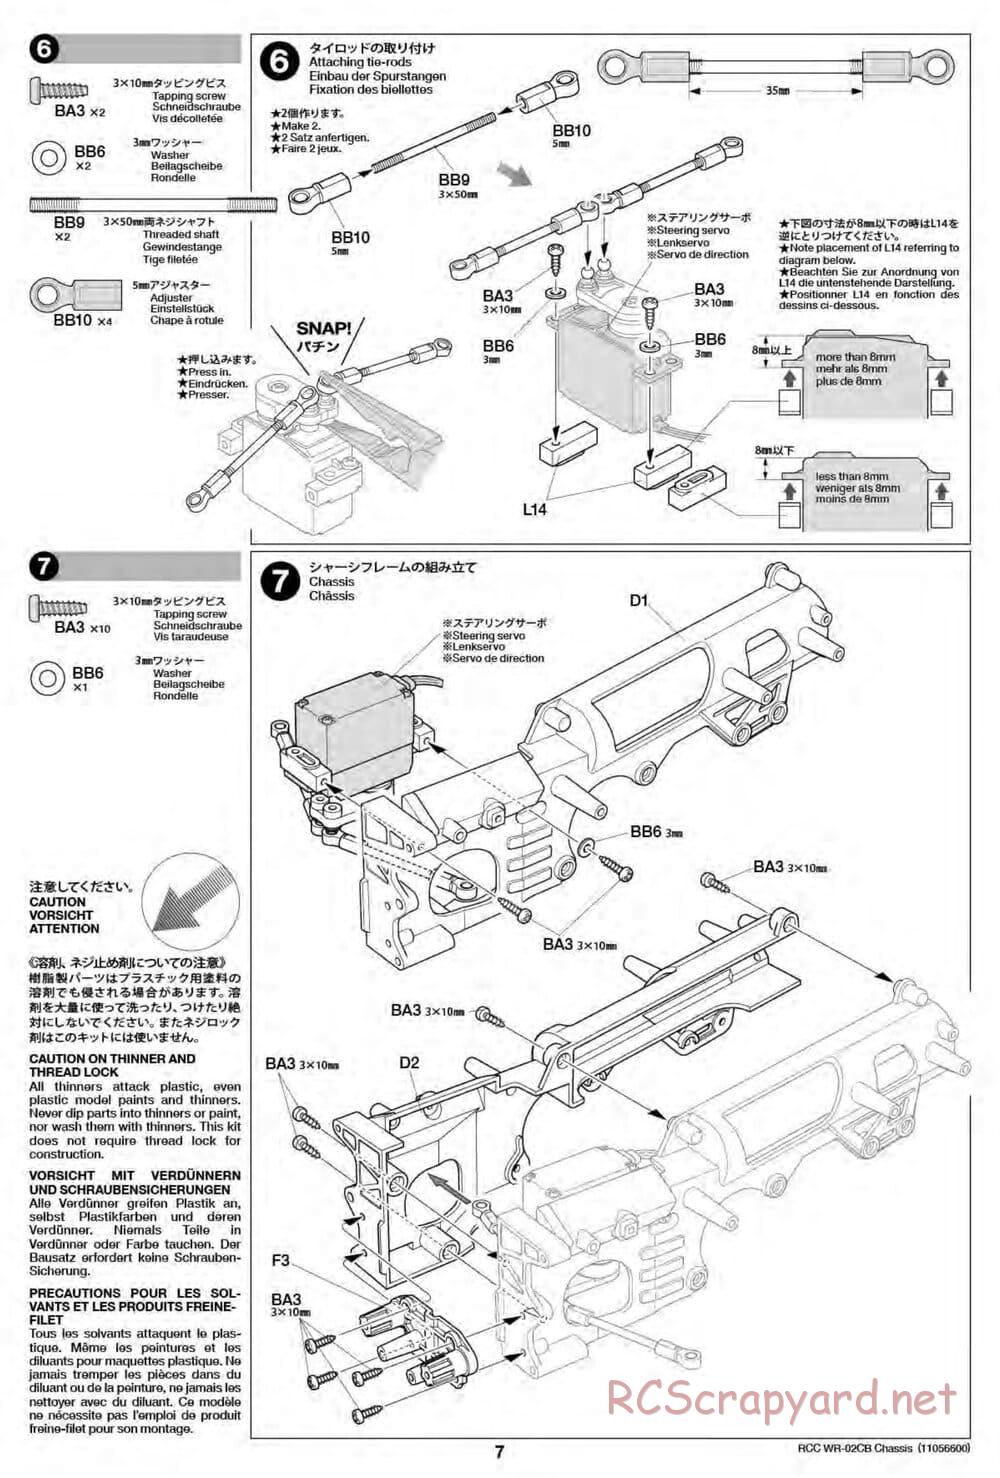 Tamiya - WR-02CB Chassis - Manual - Page 7